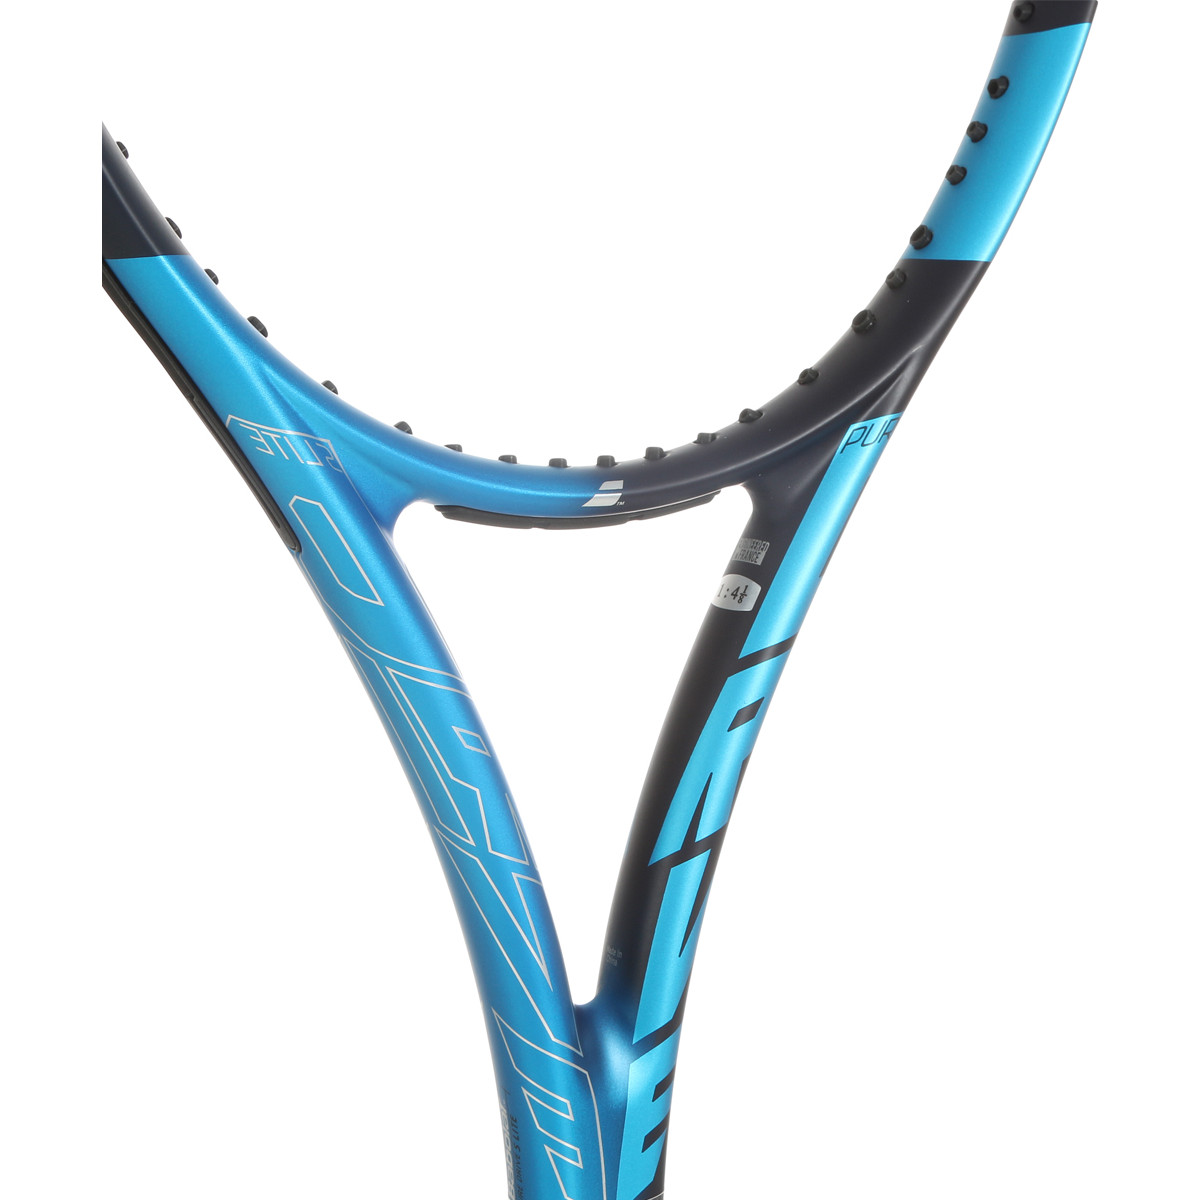 Babolat Pure Drive Lite Adult Tennis Racket